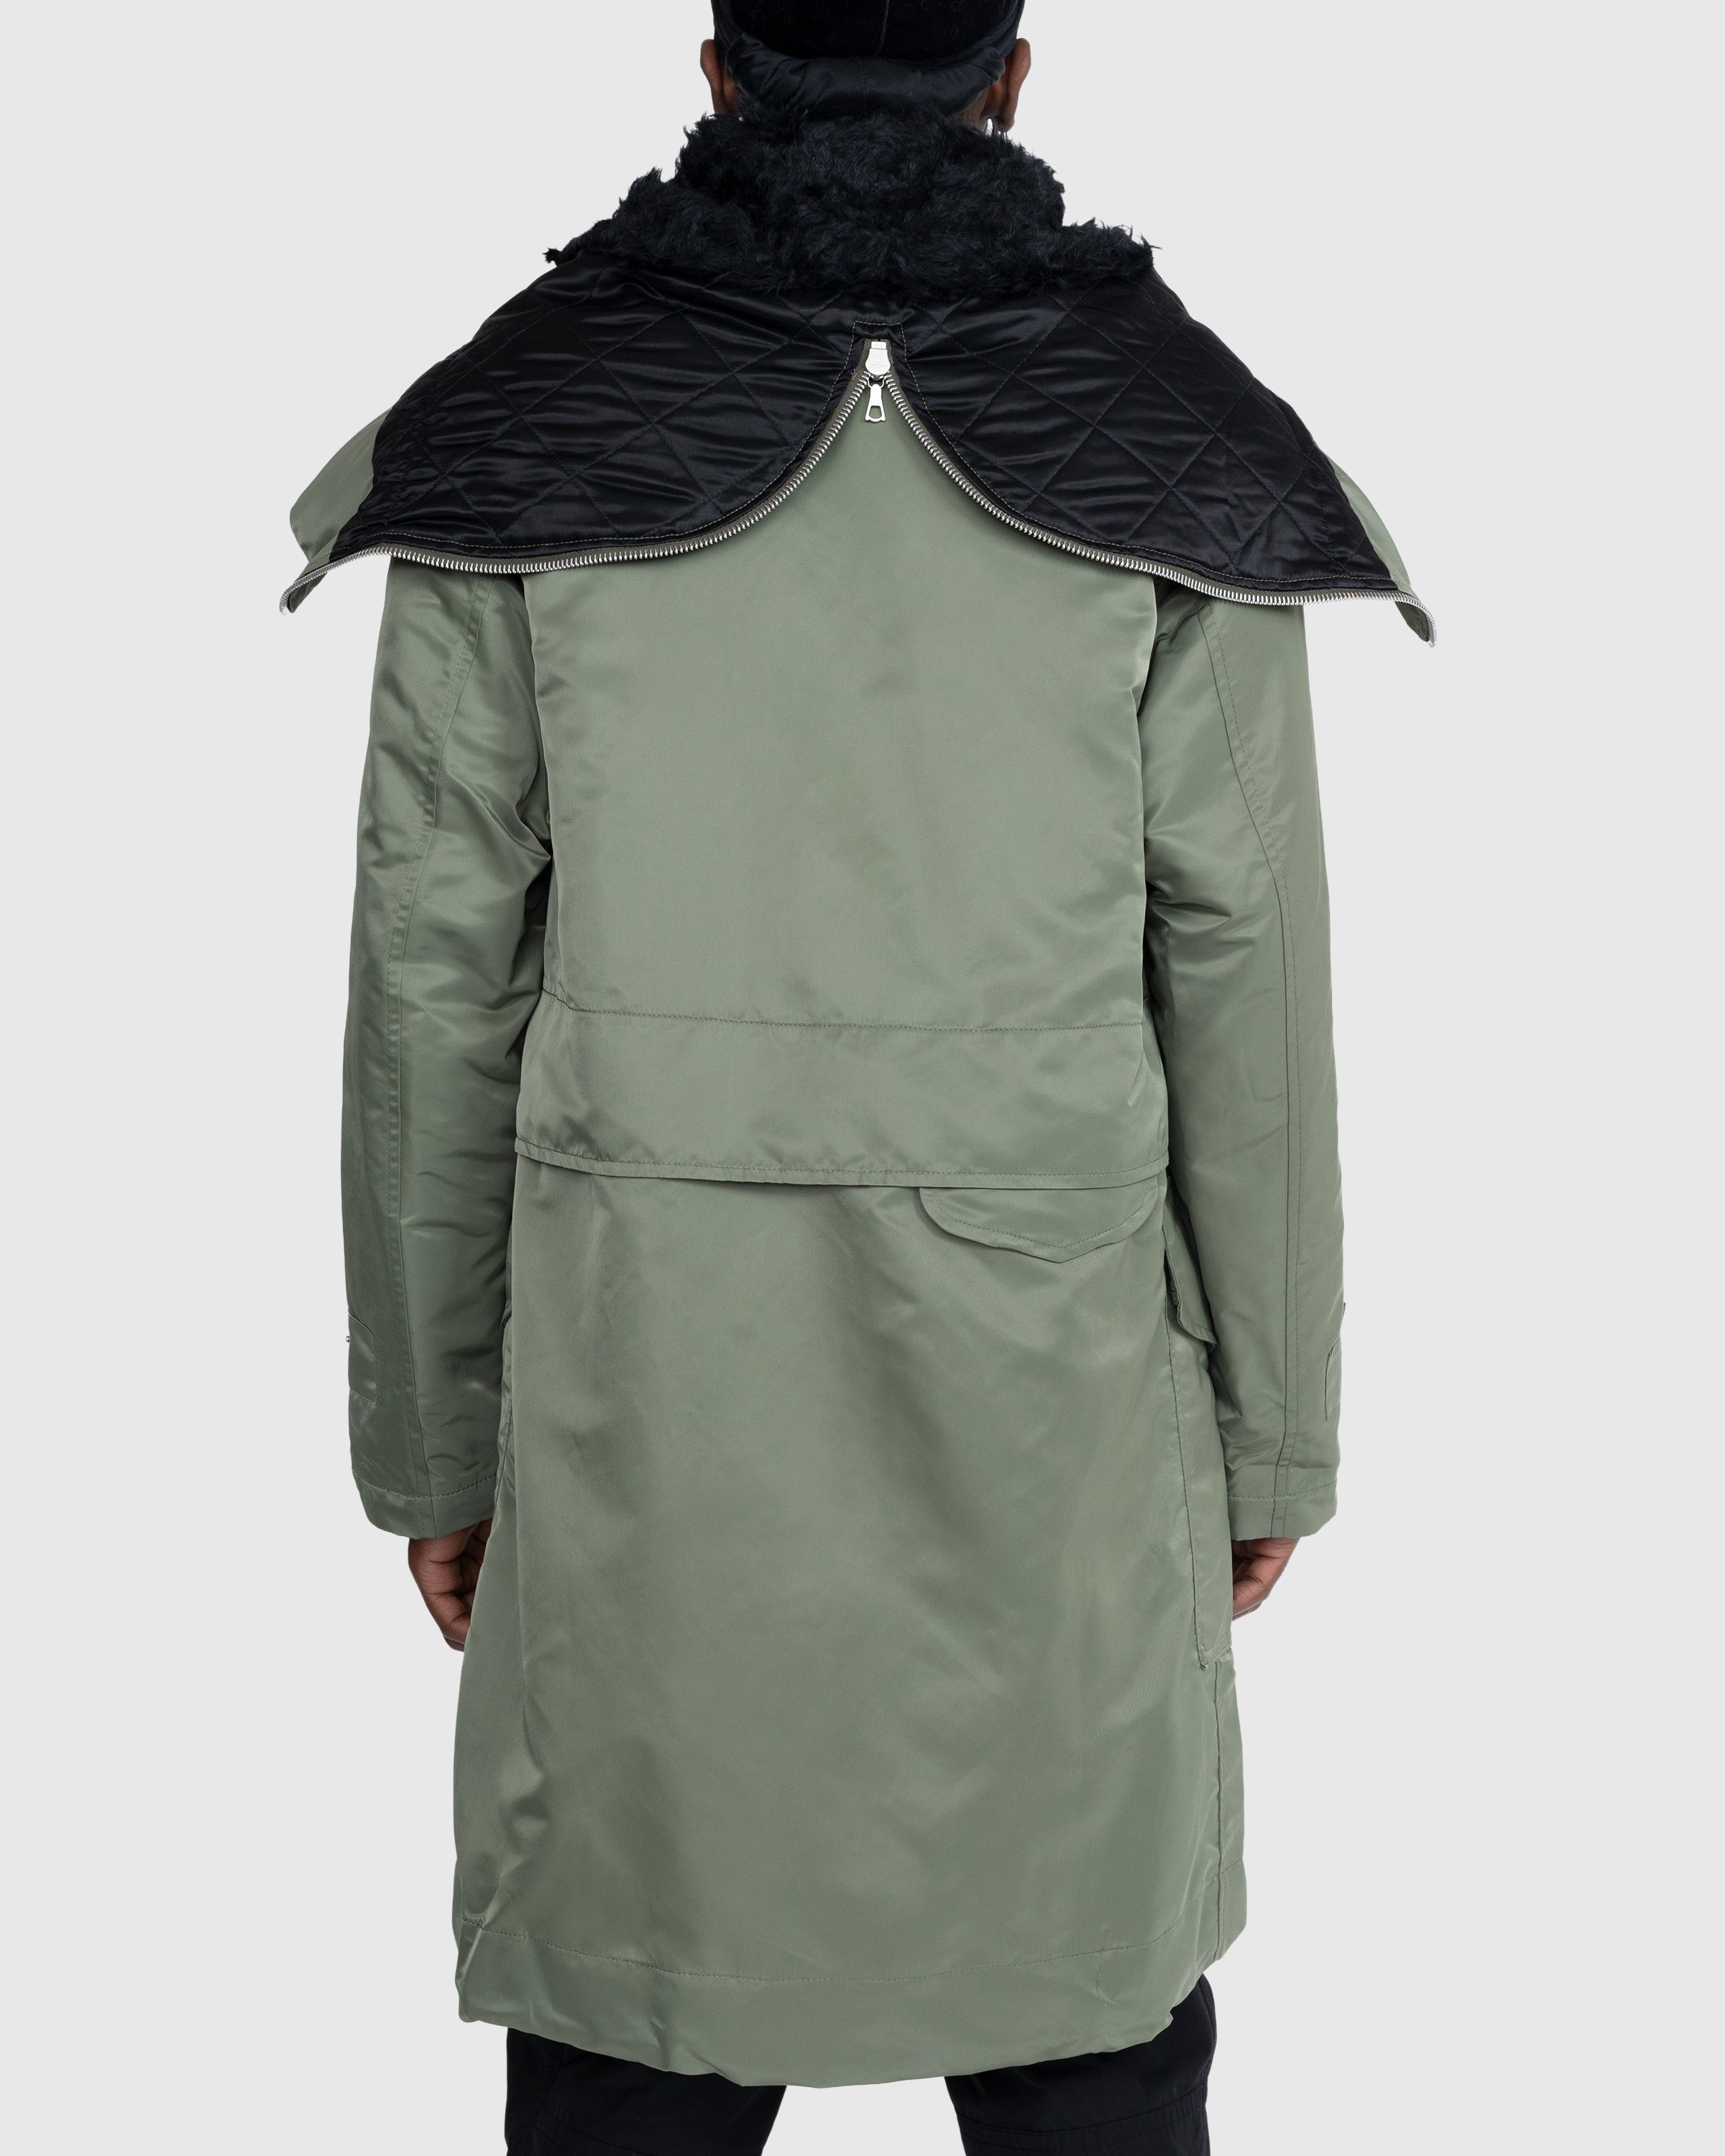 Dries van Noten - Verreli Jacket Khaki - Clothing - Green - Image 4